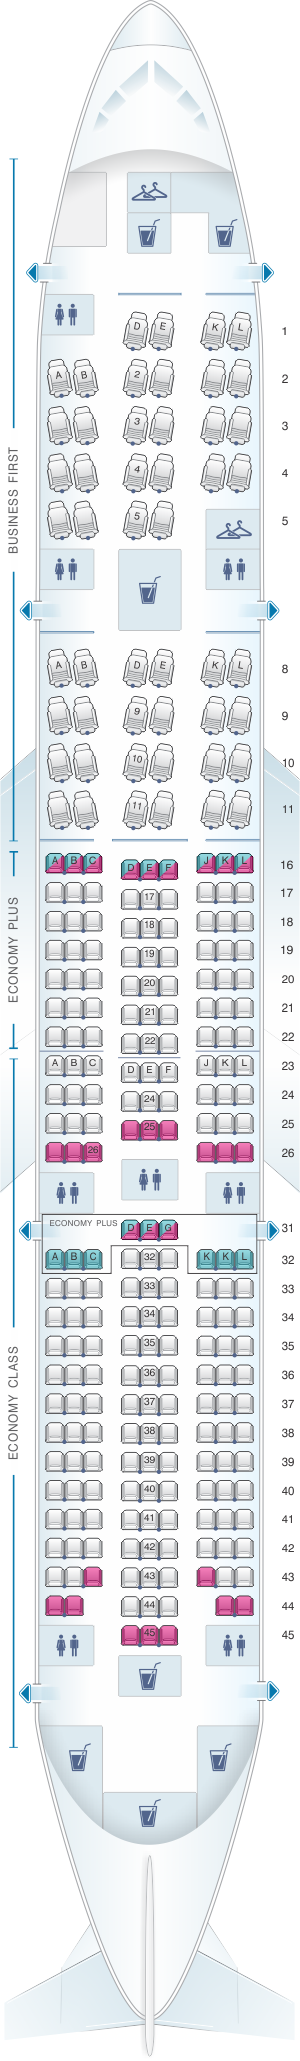 777 222 Seating Chart